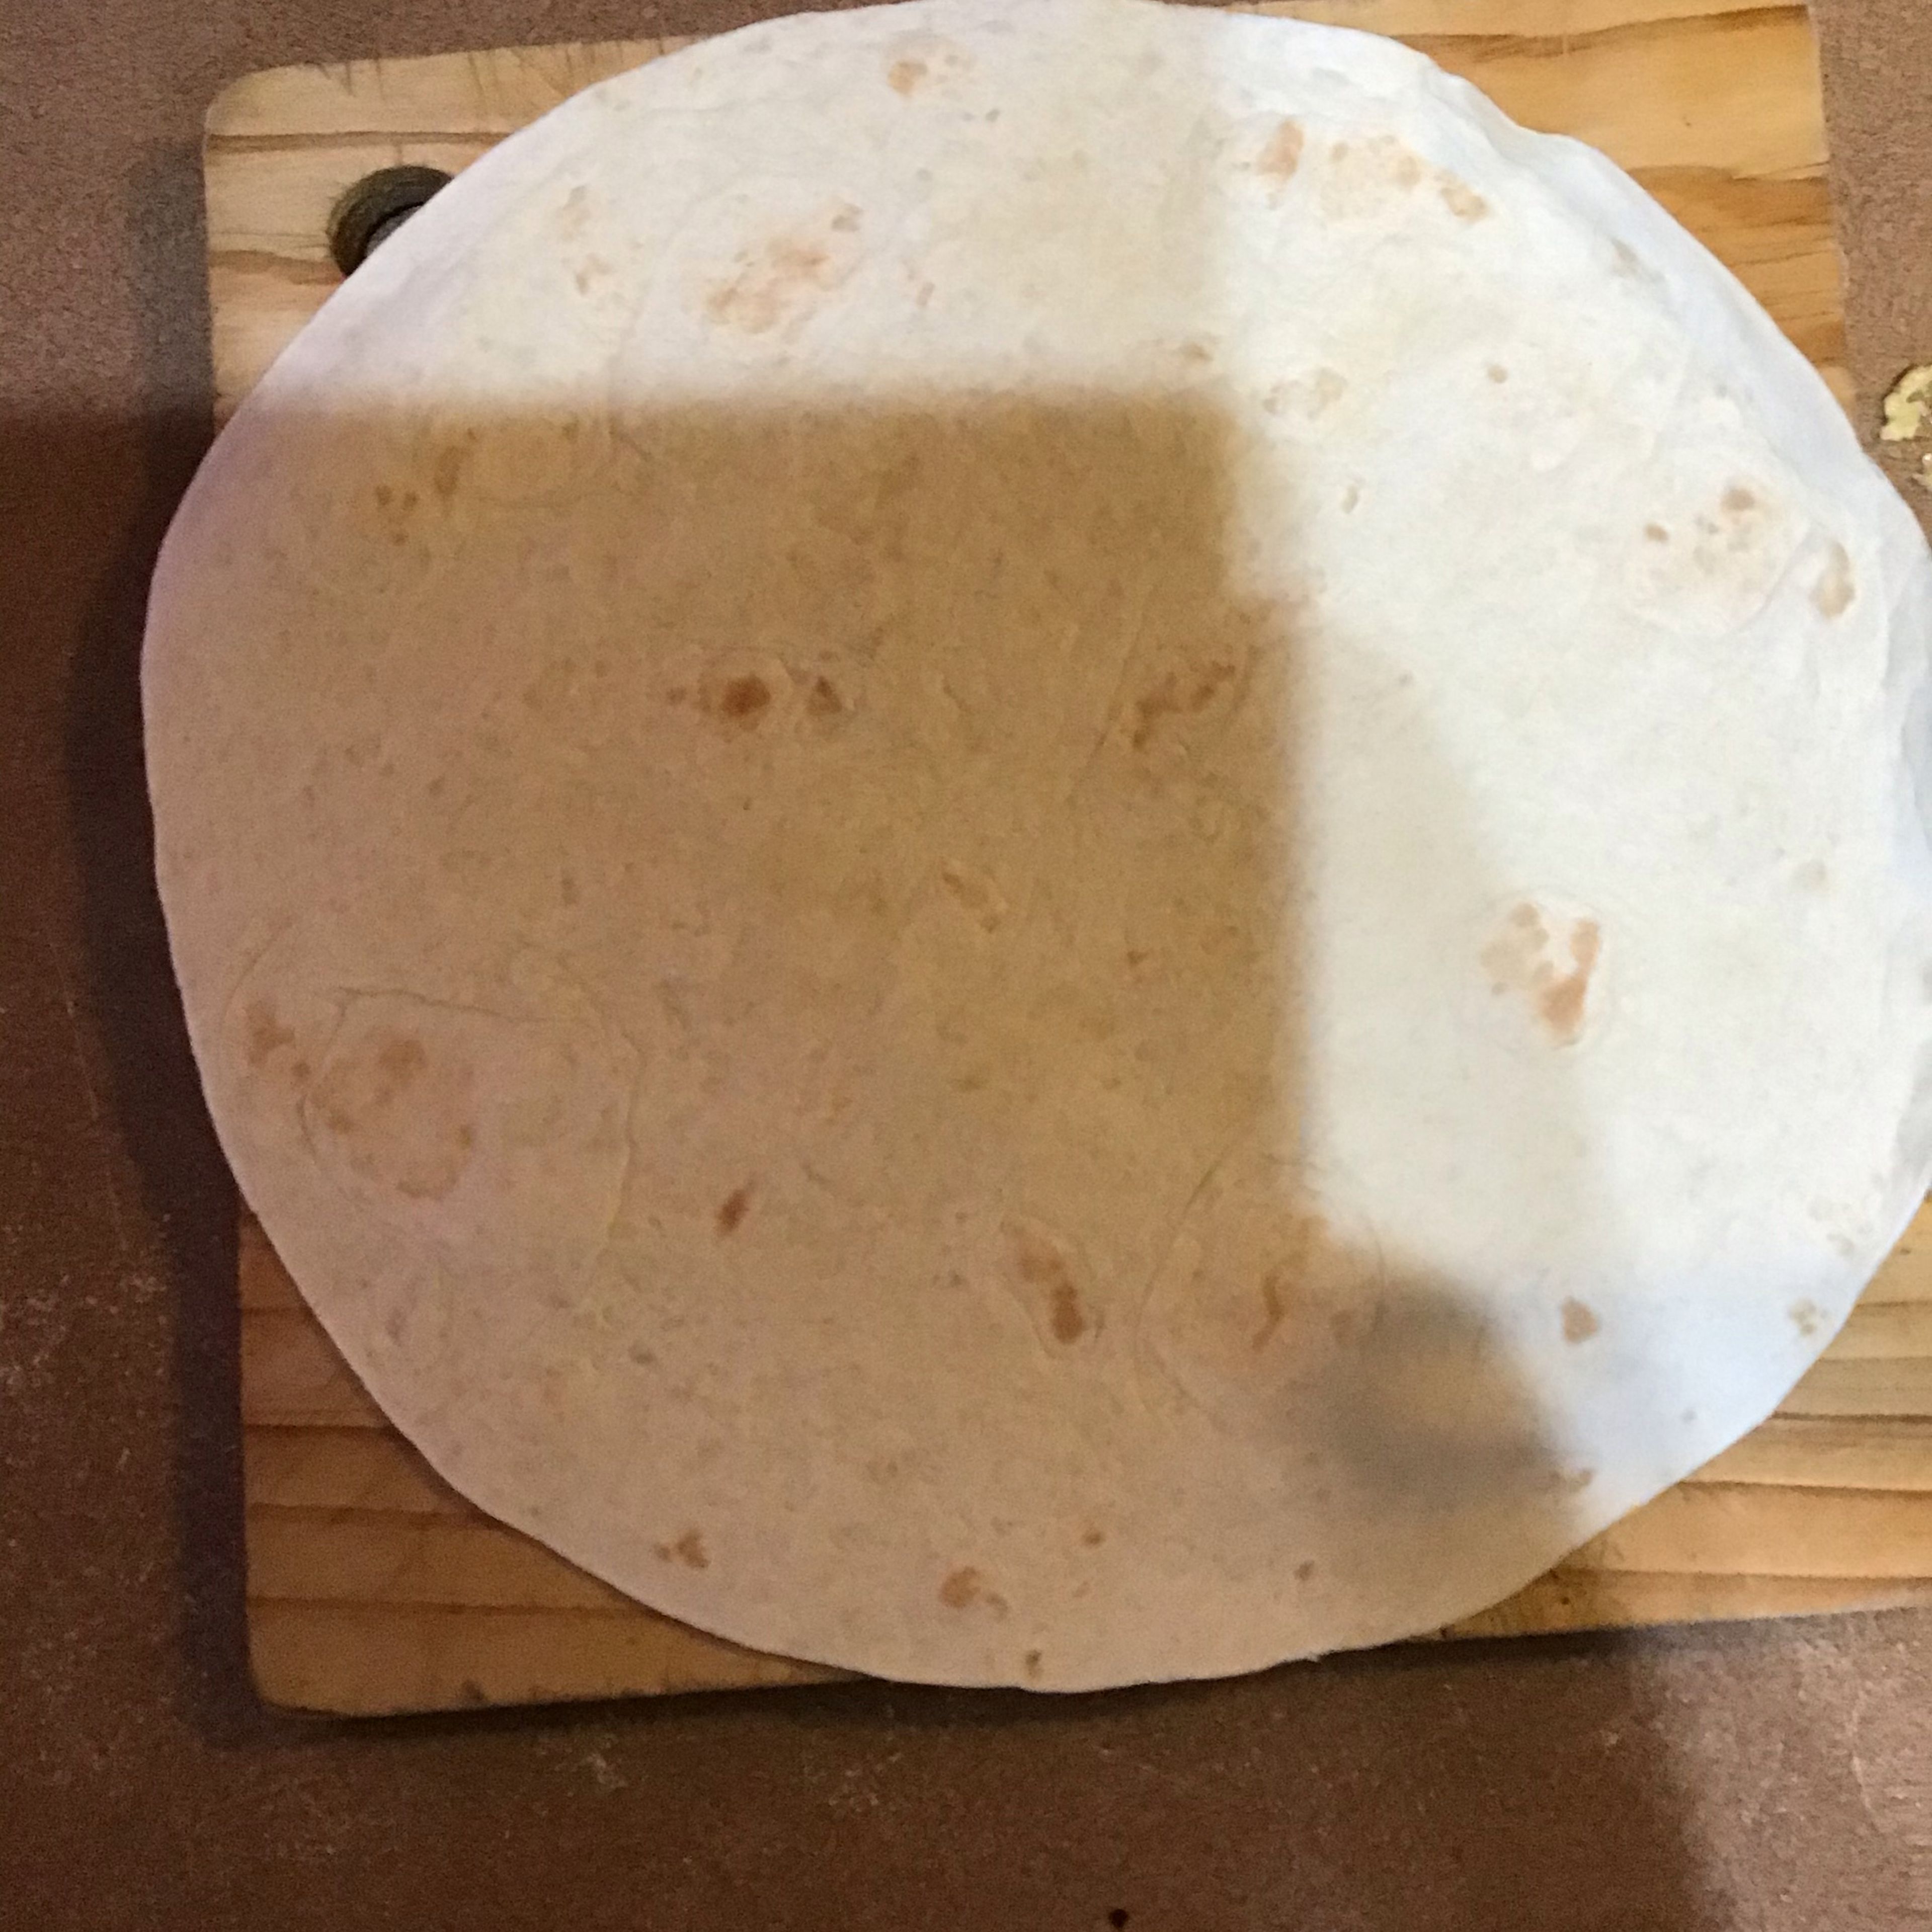 Lay out tortilla